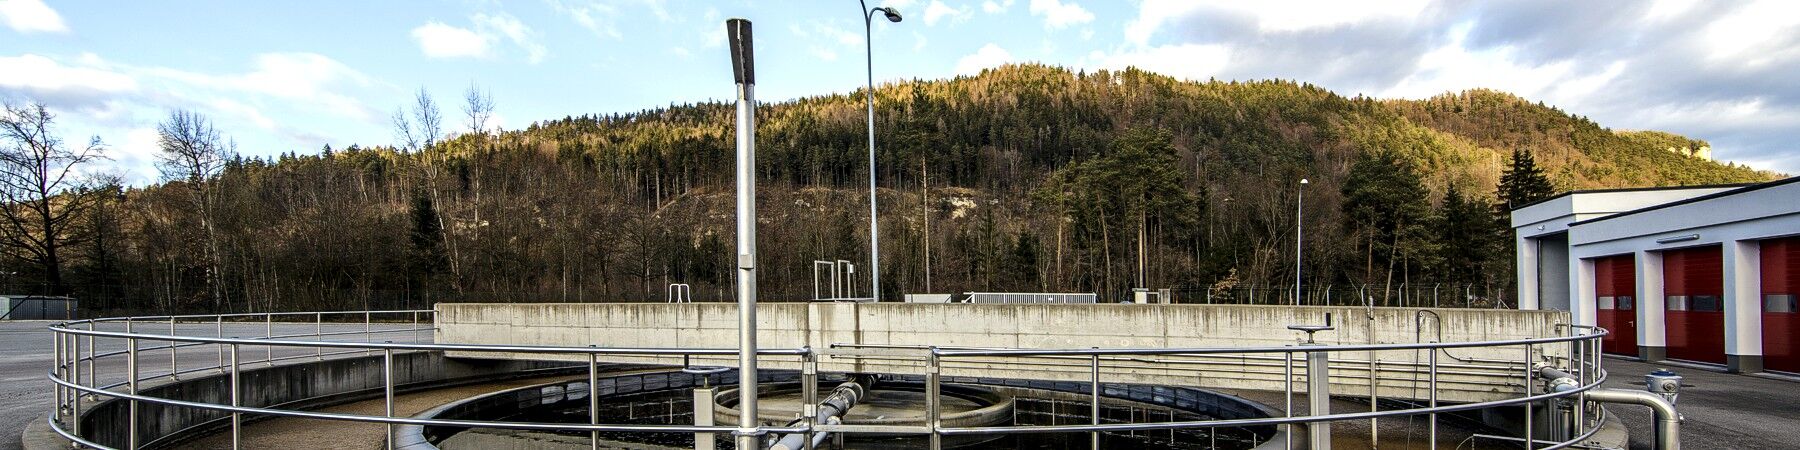 Ferlach sewage treatment plant Ferlach sewage treatment plant Modernization brings biologically pure wastewater to the community